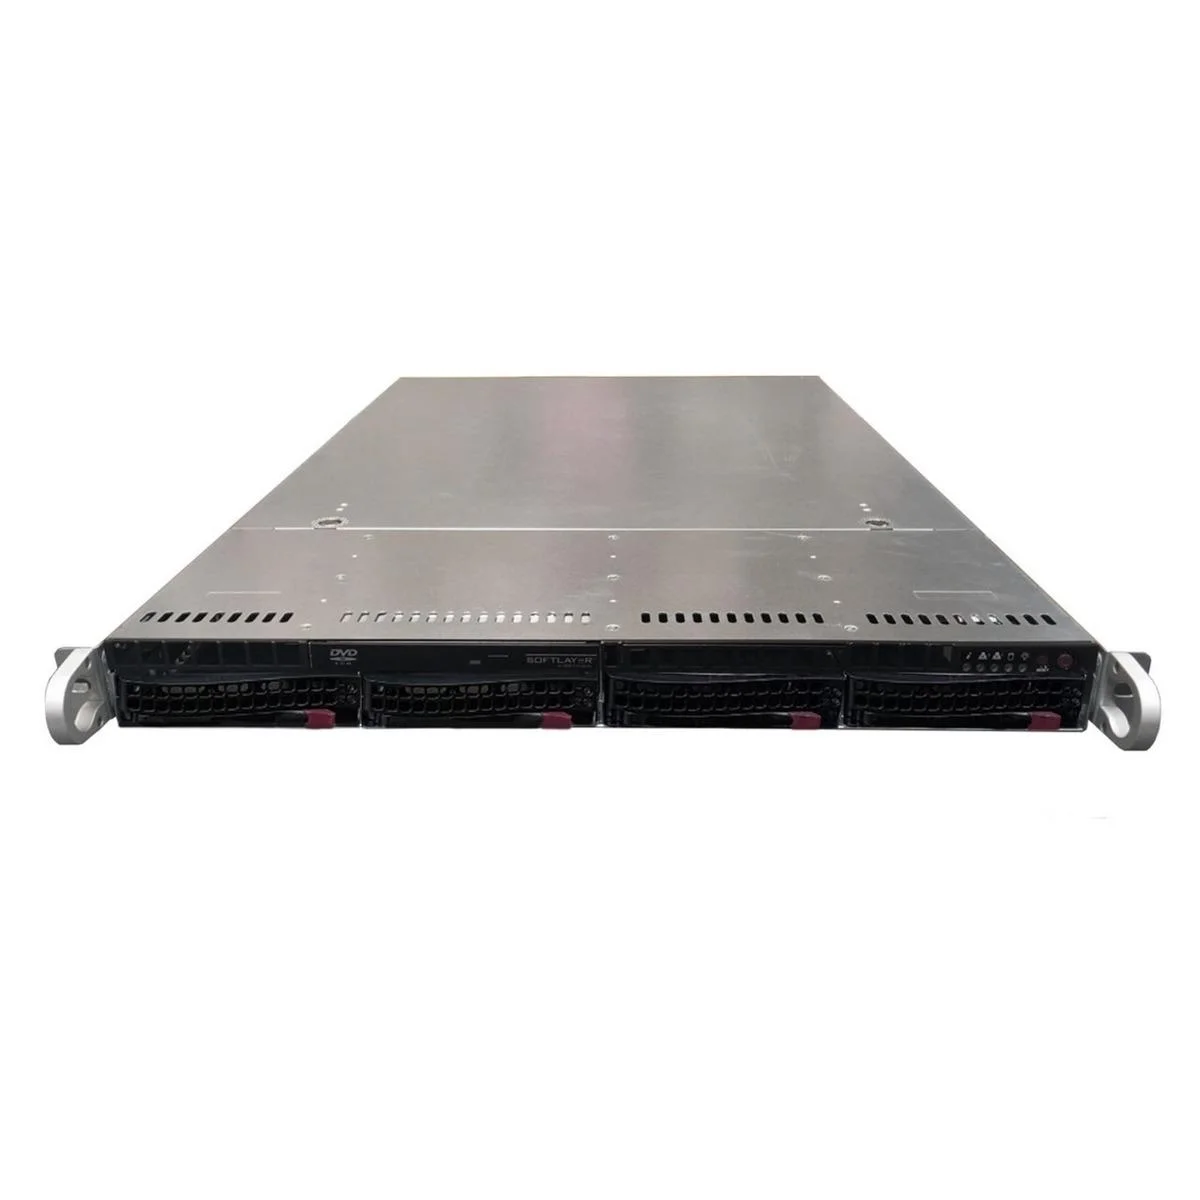 Supermicro CSE-815 X10SLM+-LN4F 1U Rack Server